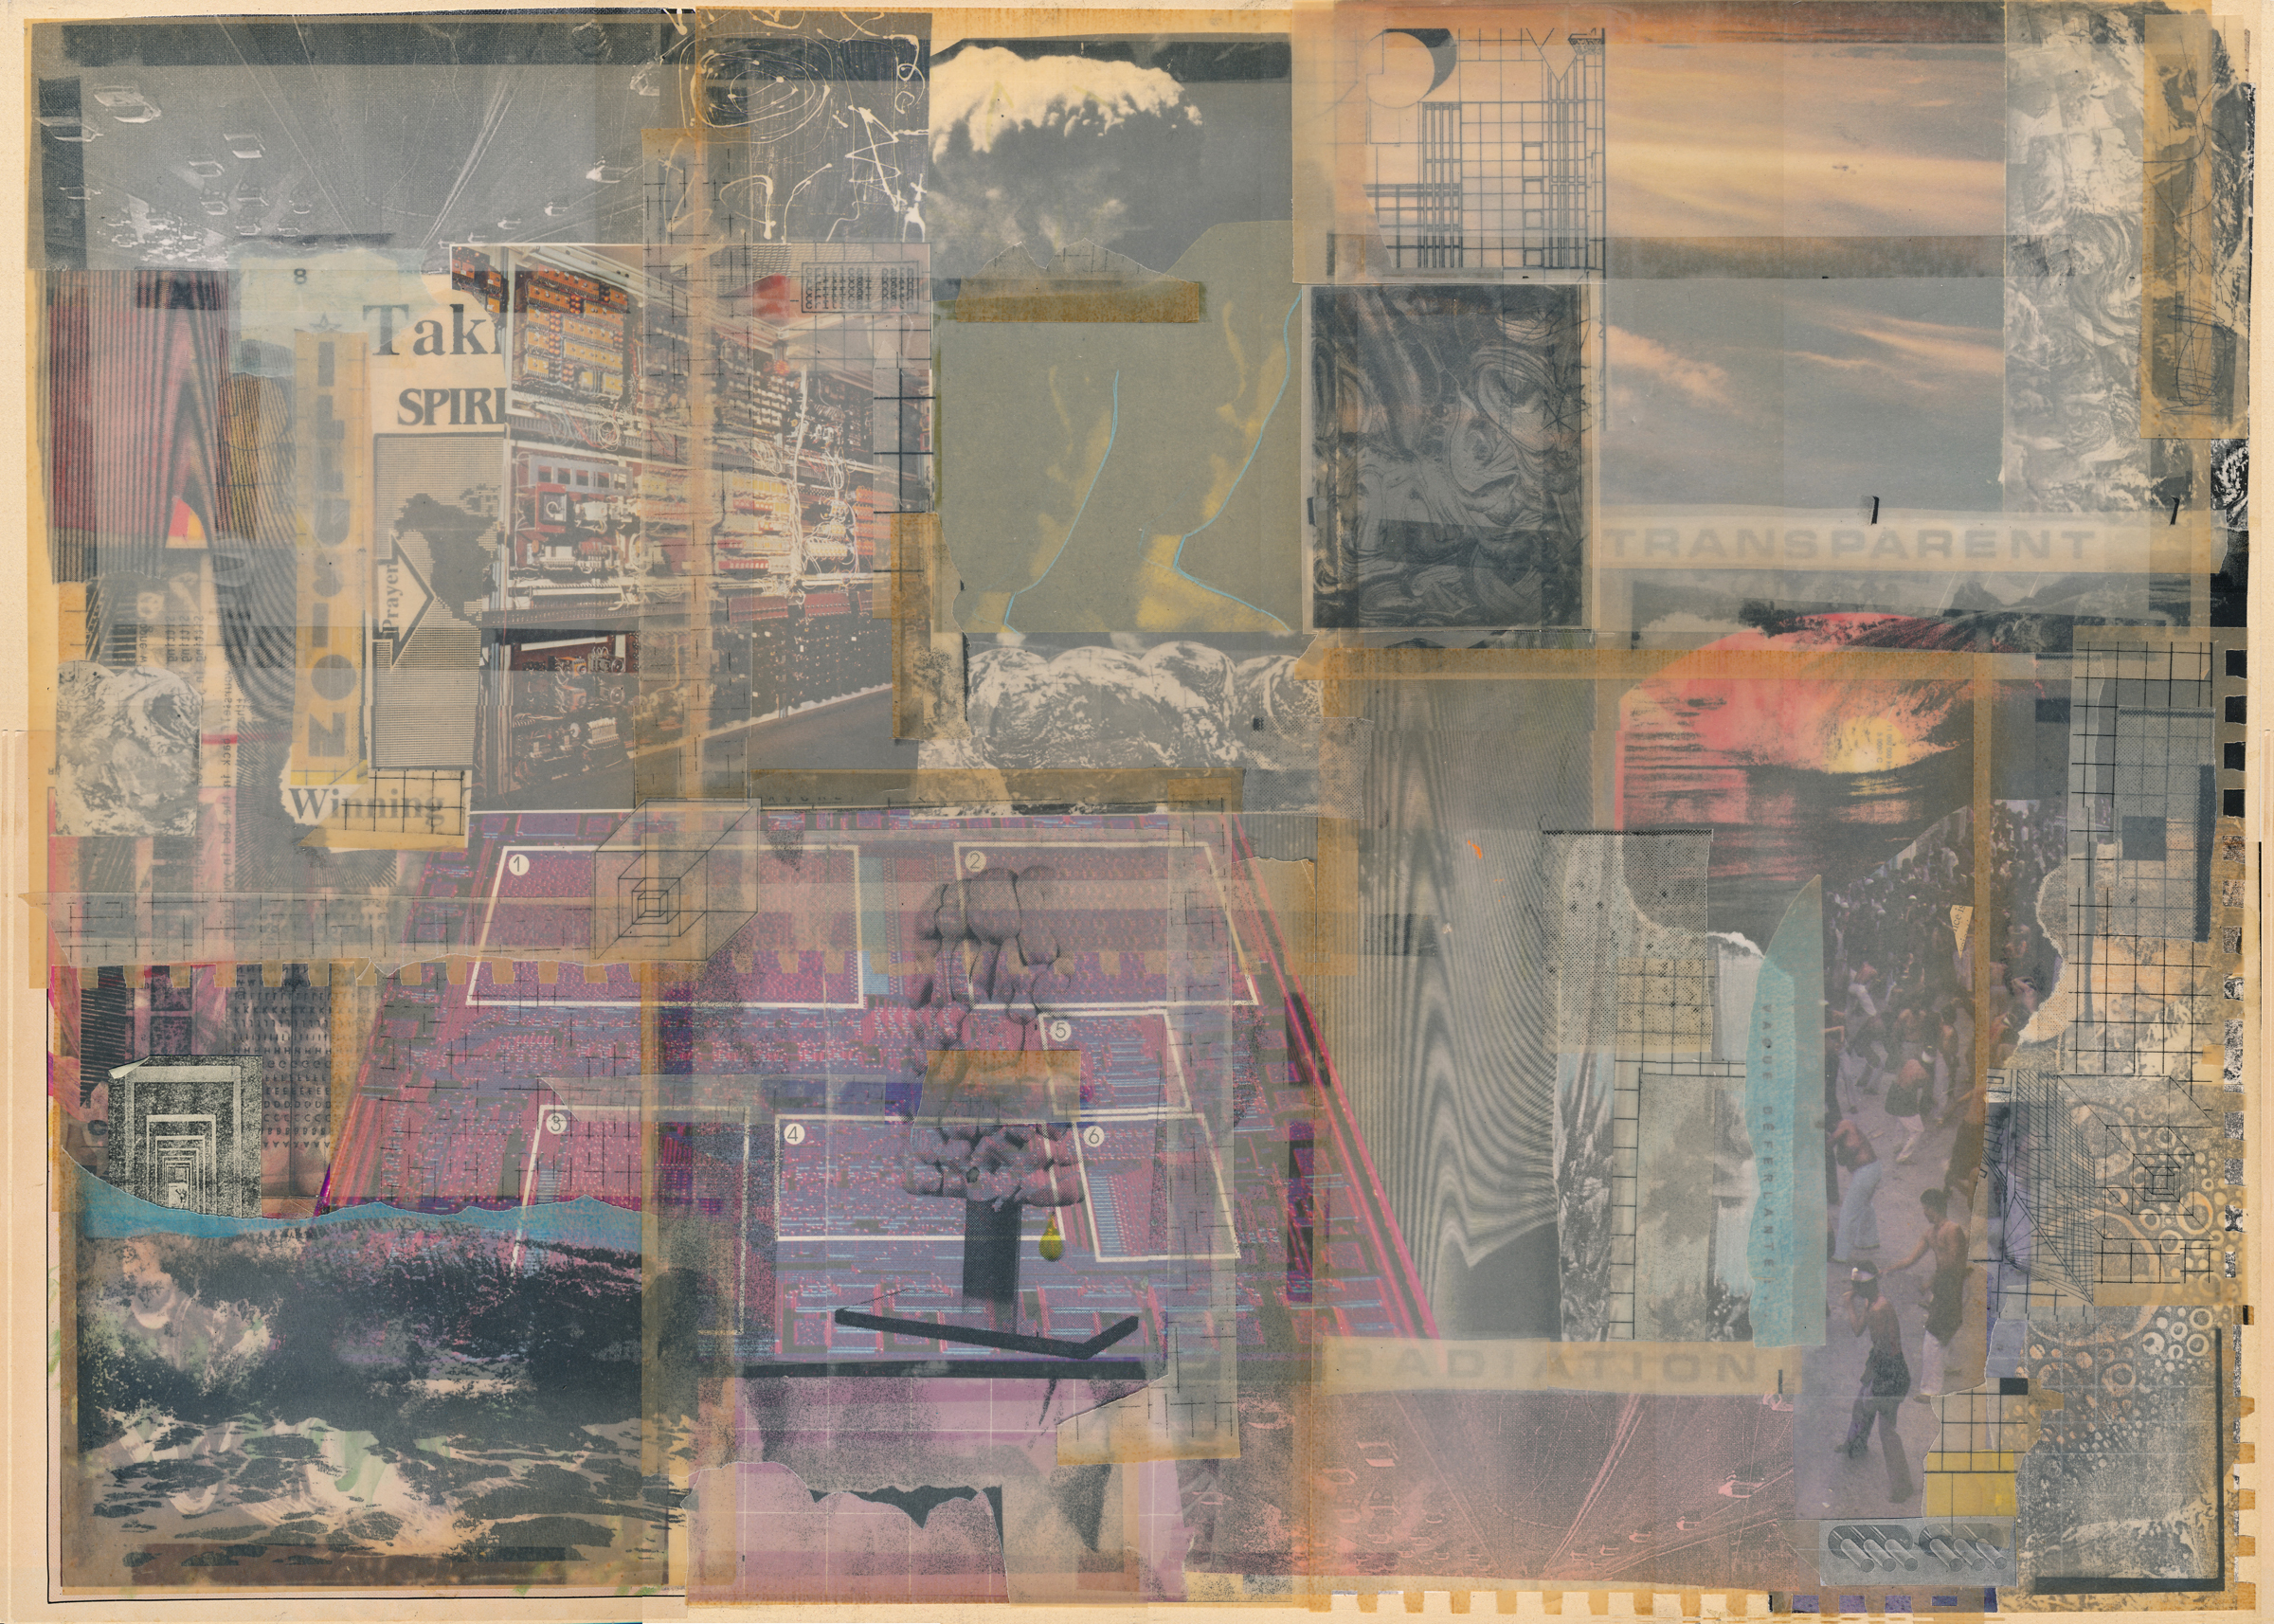   GWENAËL RATTKE   Transparent Radiation , collage on board, 30.25" x 22.5", 2014 